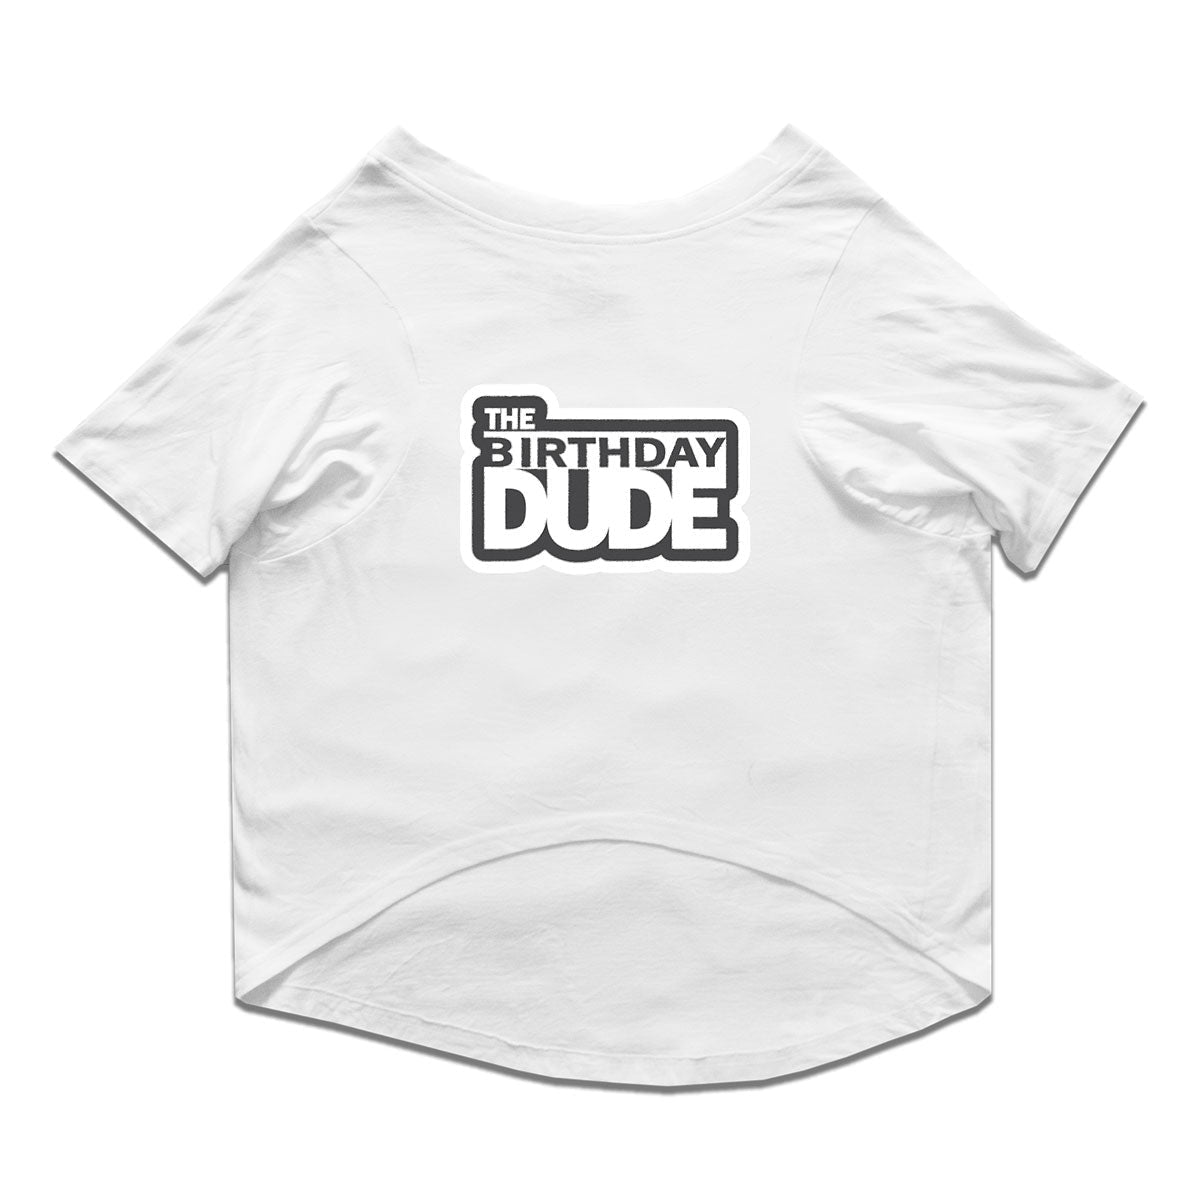 Ruse / White Ruse Basic Crew Neck 'The Birthday Dude' Printed Half Sleeves Dog Tee11